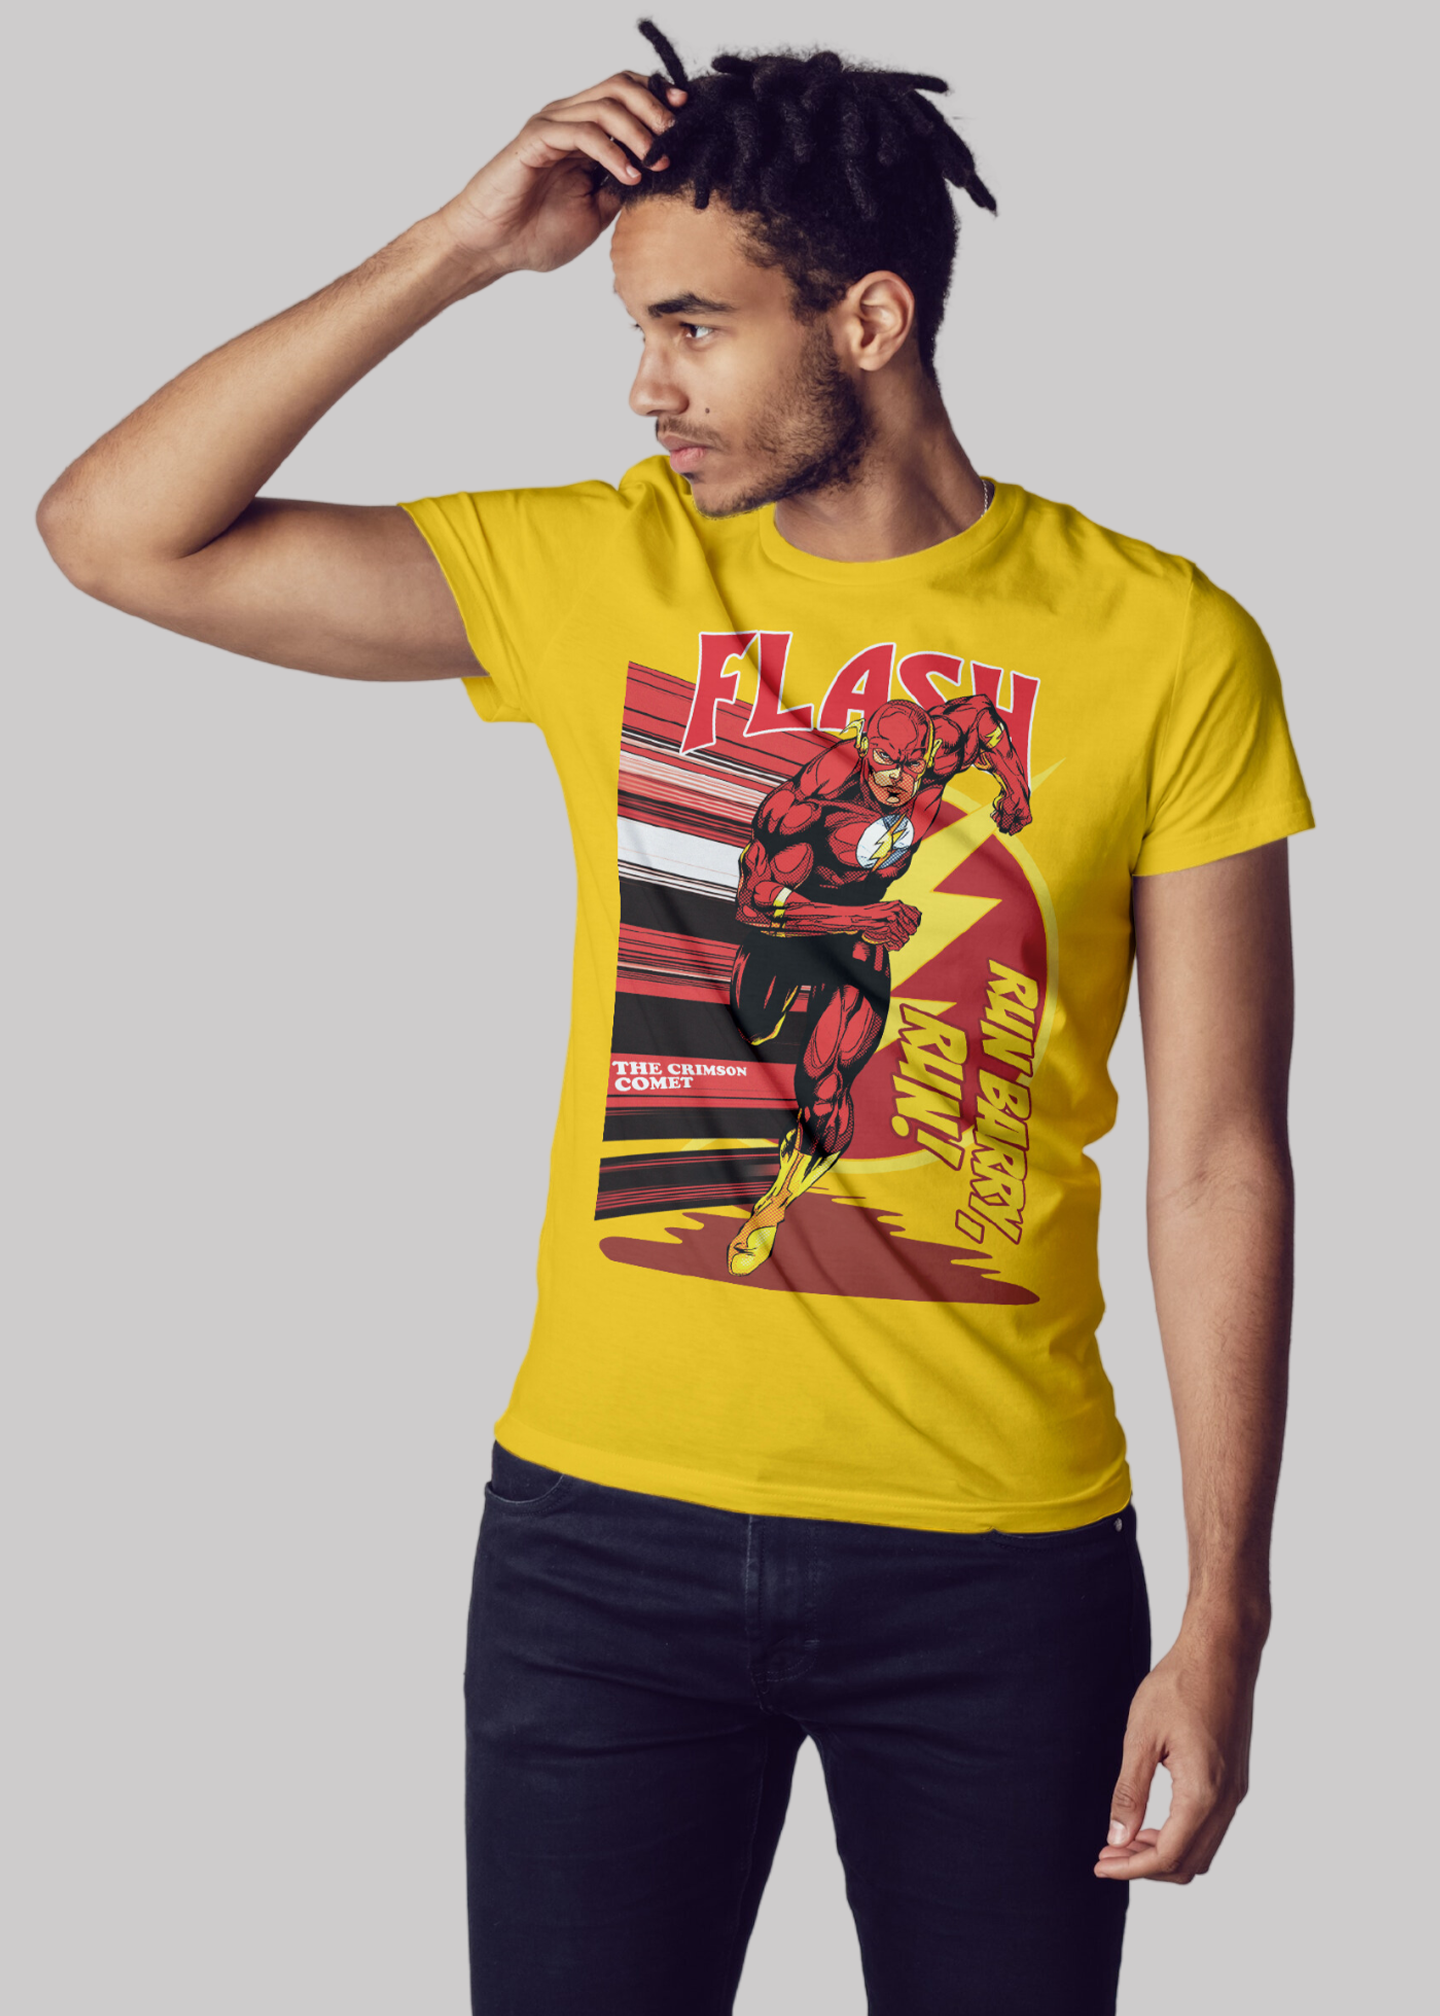 The flash Printed Half Sleeve Premium Cotton T-shirt For Men